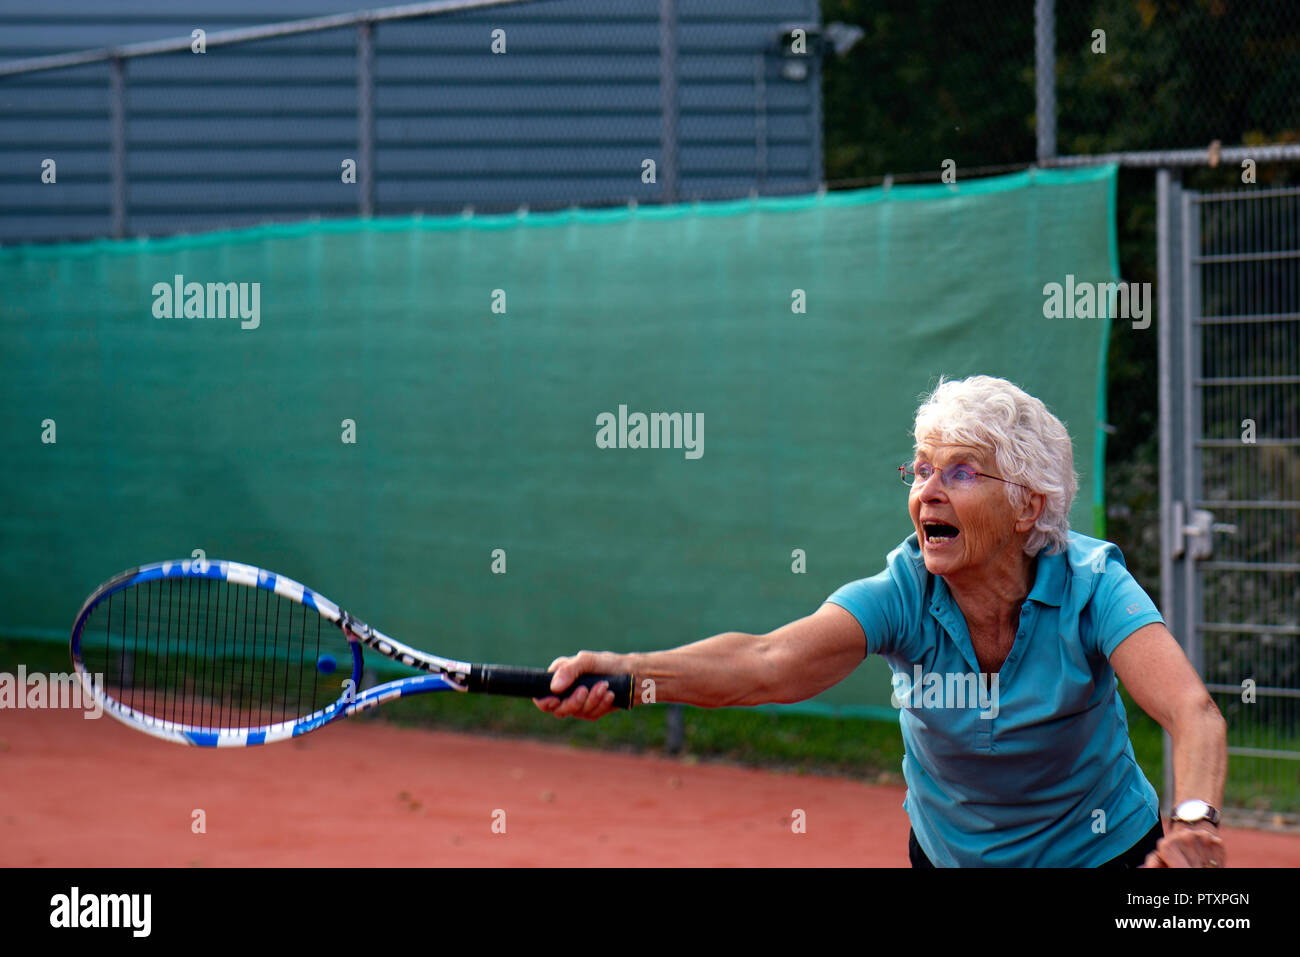 Sportive elderly woman playing tennis Stock Photo